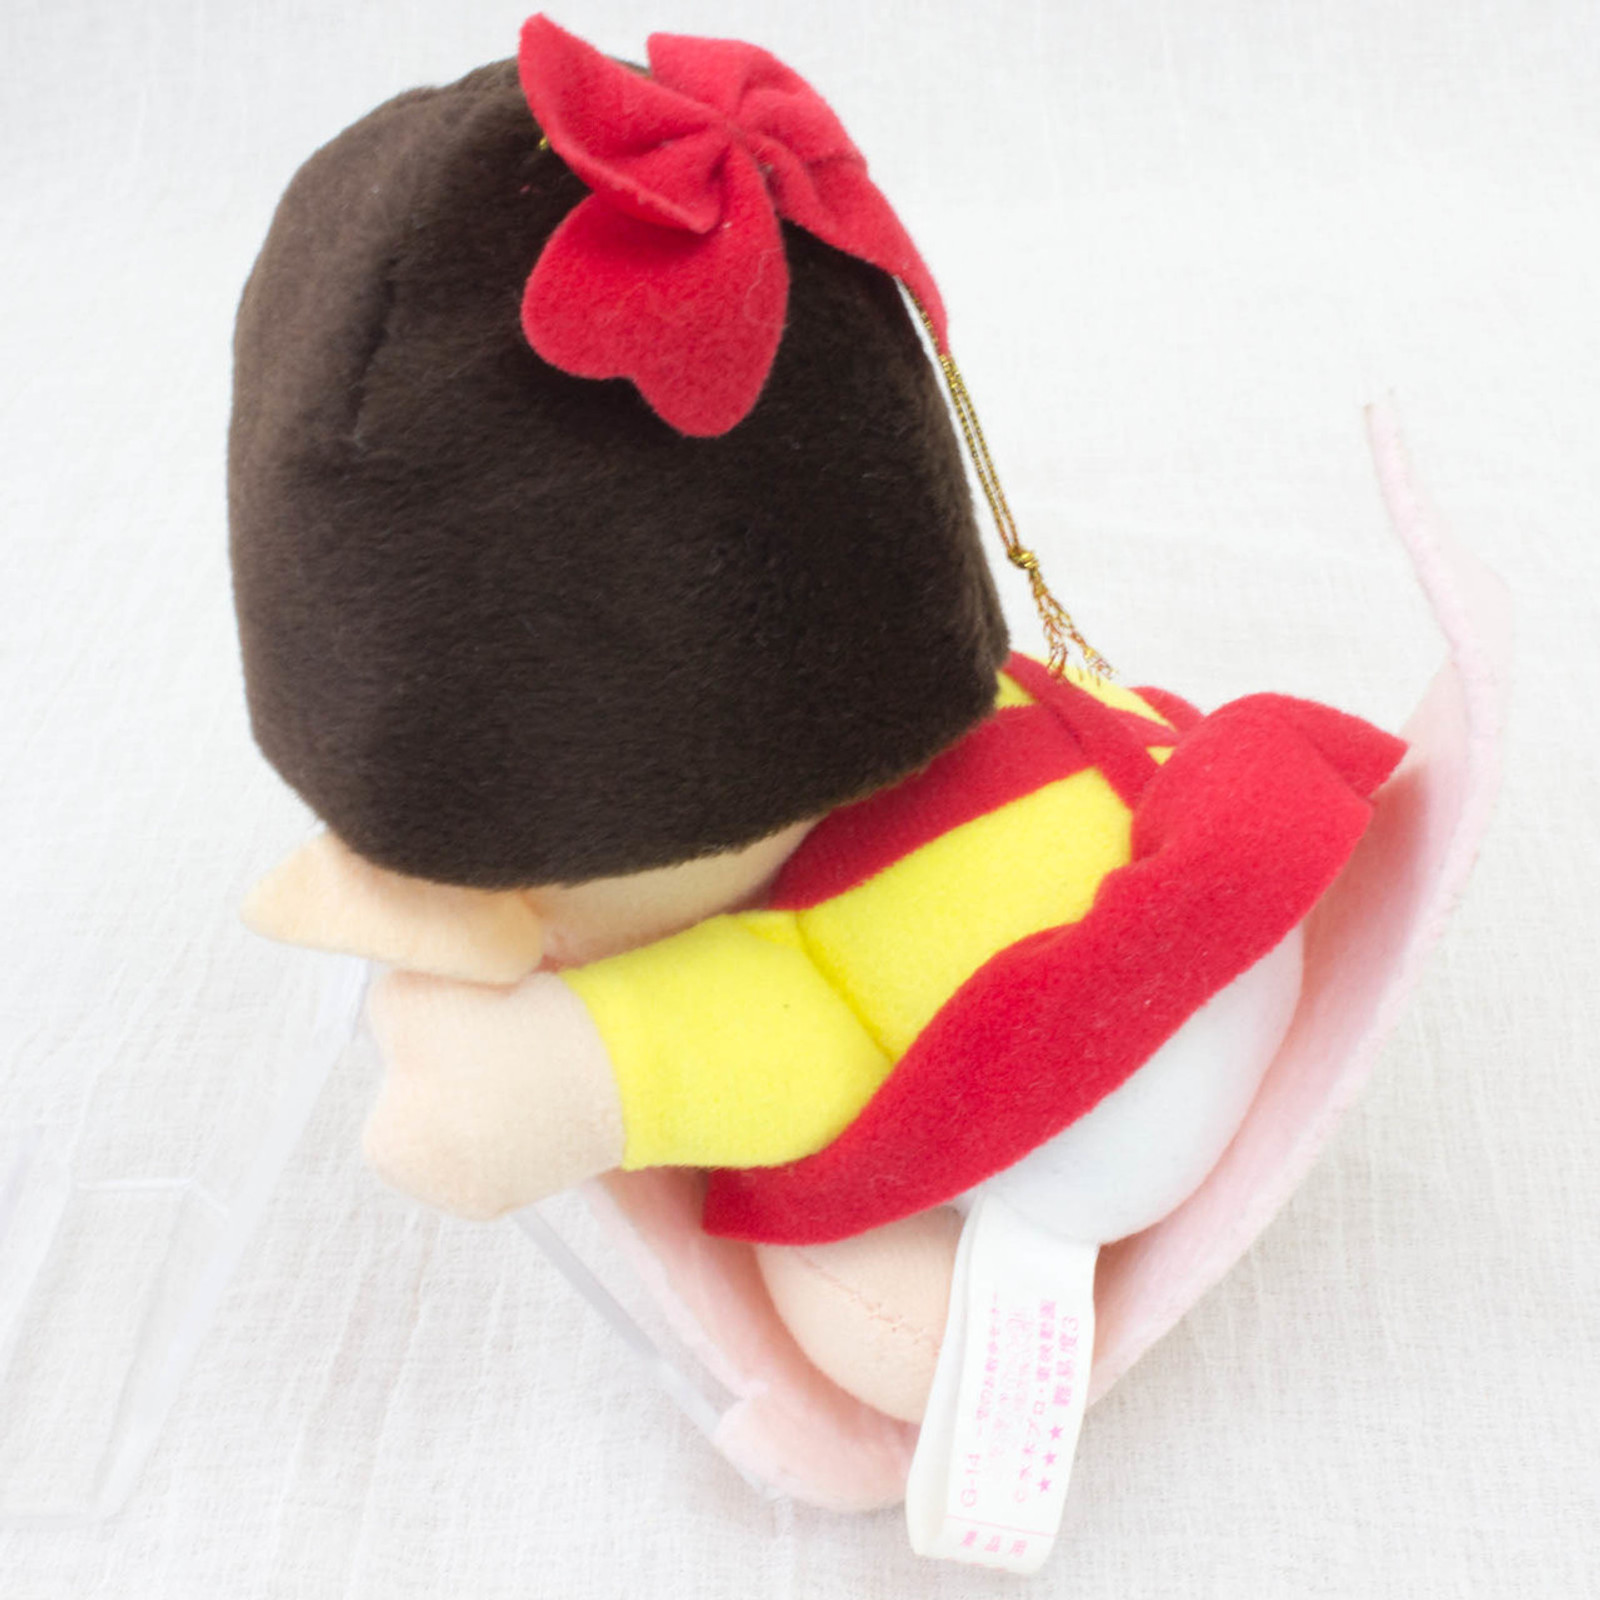 RARE! Gegege no Kitaro Nekomusume 6" Plush Doll JAPAN ANIME YOKAI